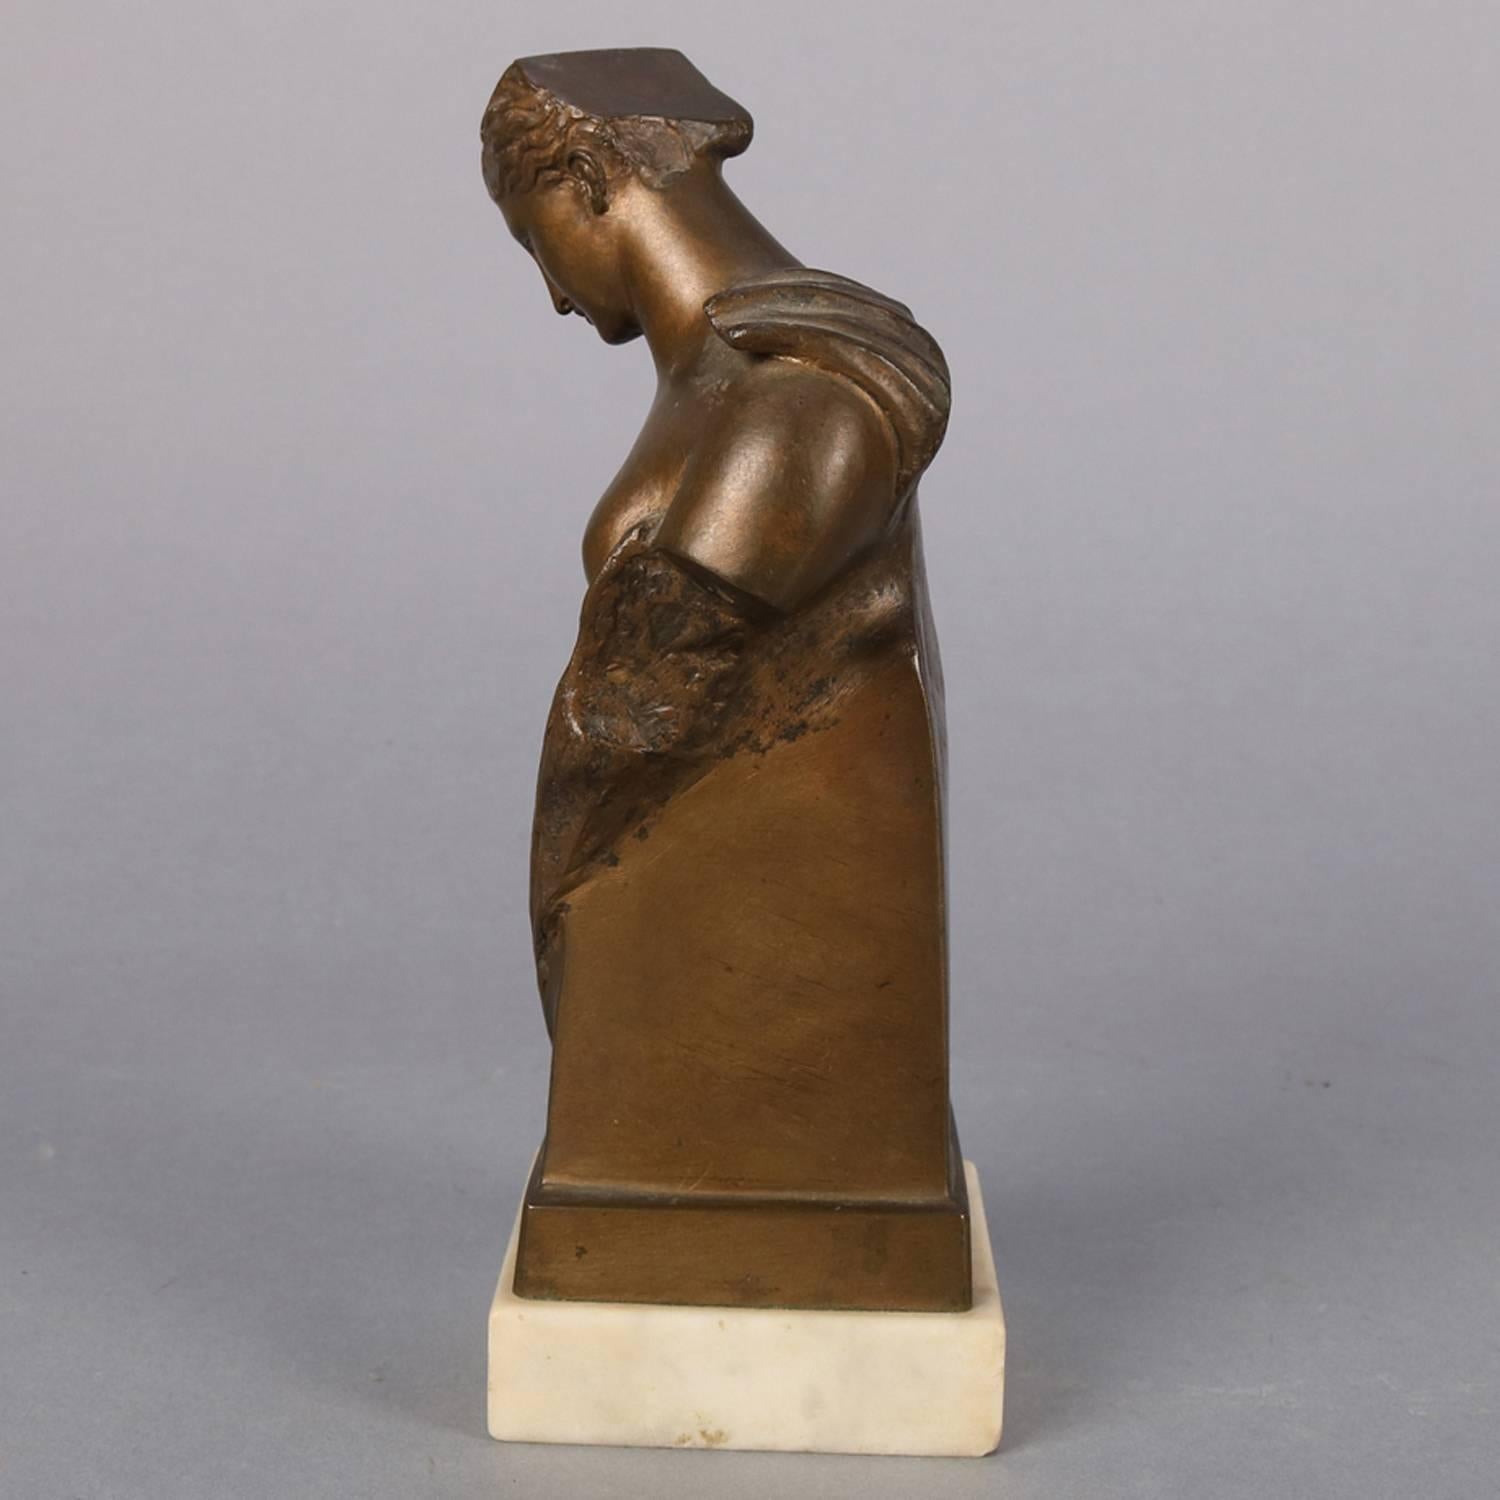 Metal Antique Classical 3/4 Partial Nude Sculpture Portrait of Woman, Dated 1890